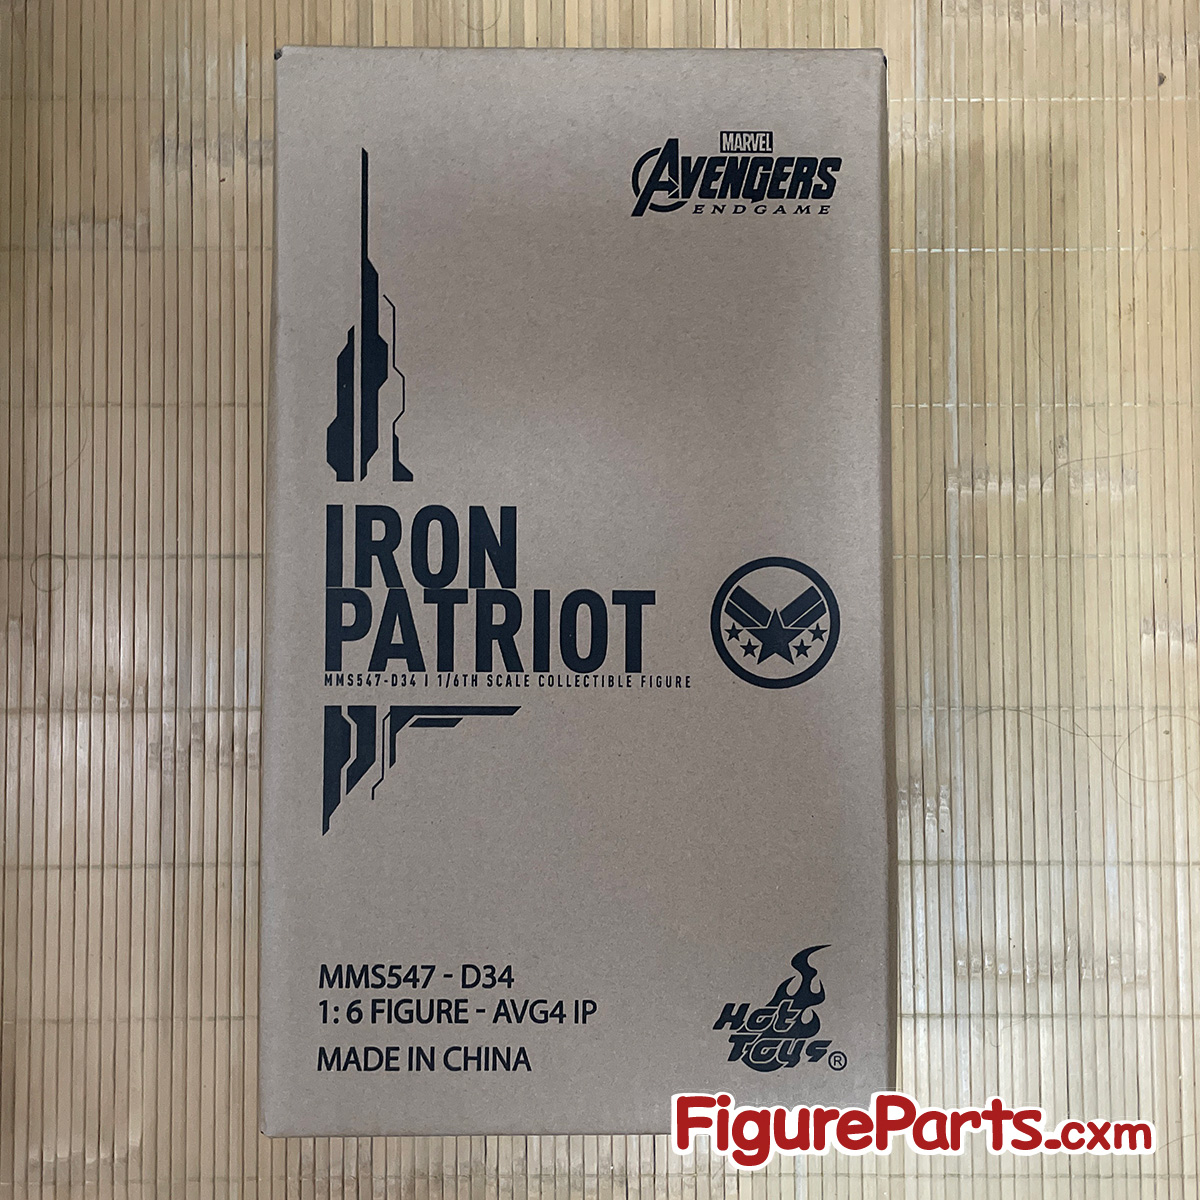 Hot Toys Iron Patriot Avengers Endgame mms547 2